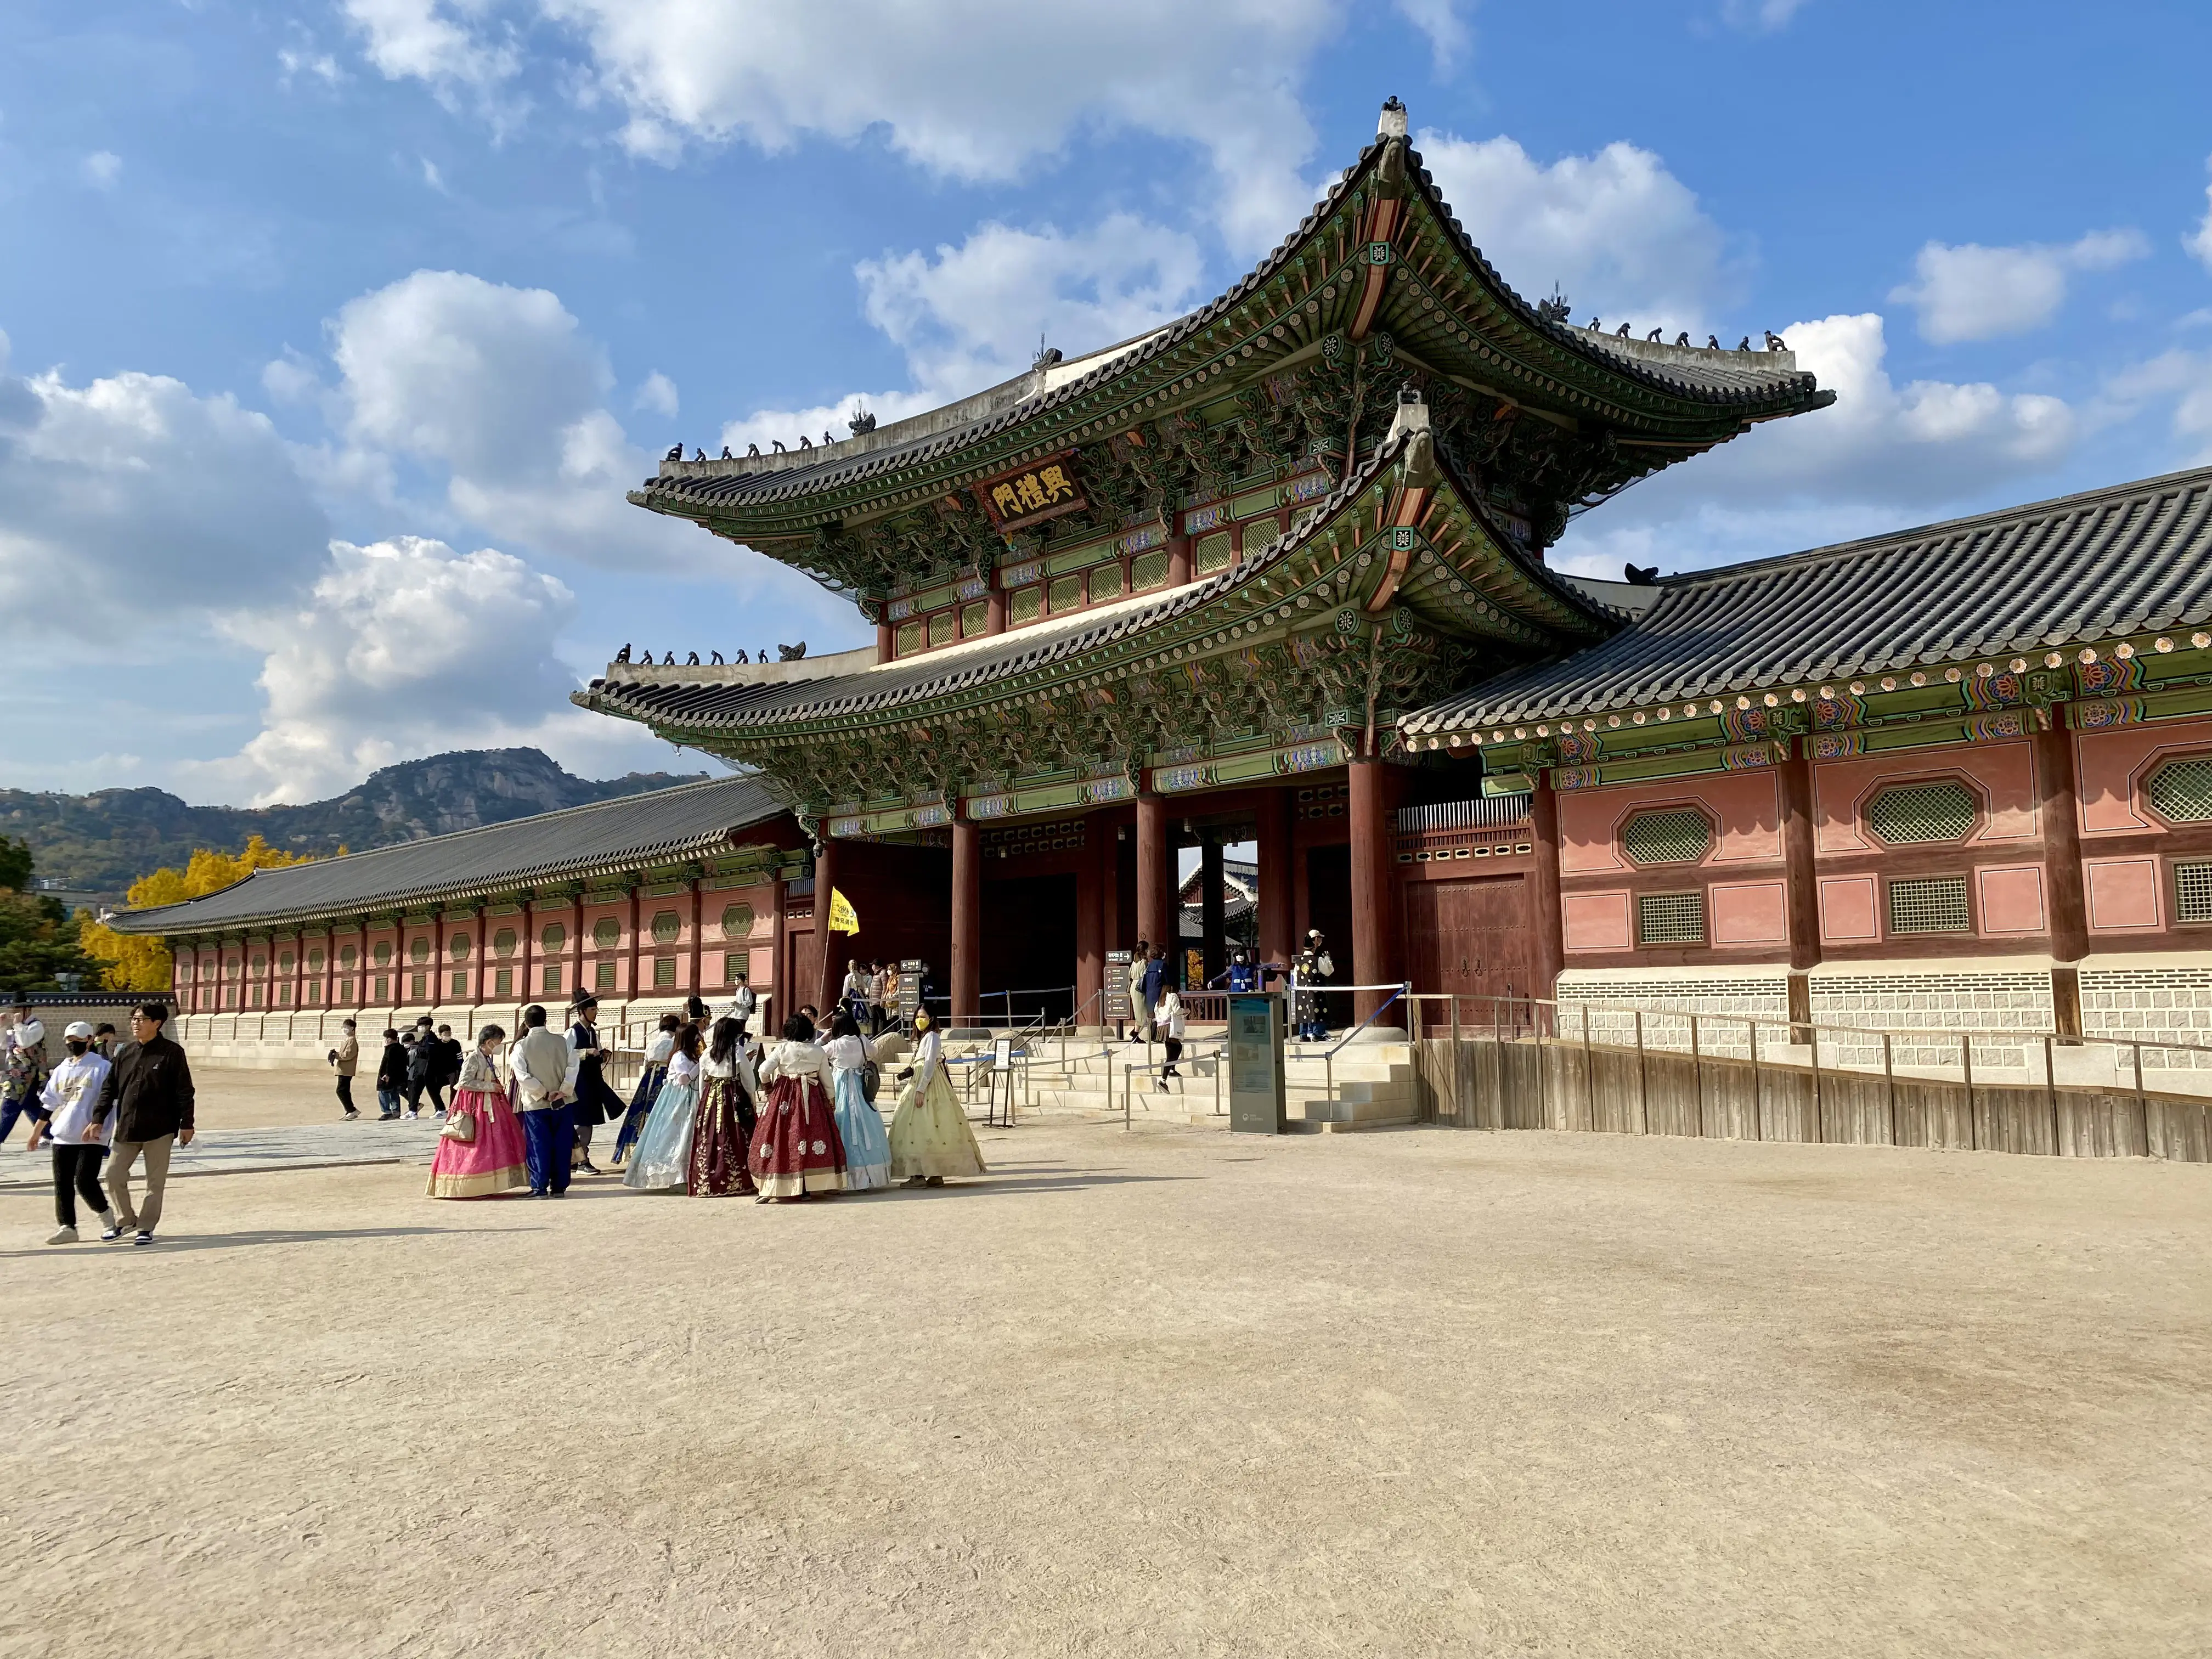 Entrance and Hanbok